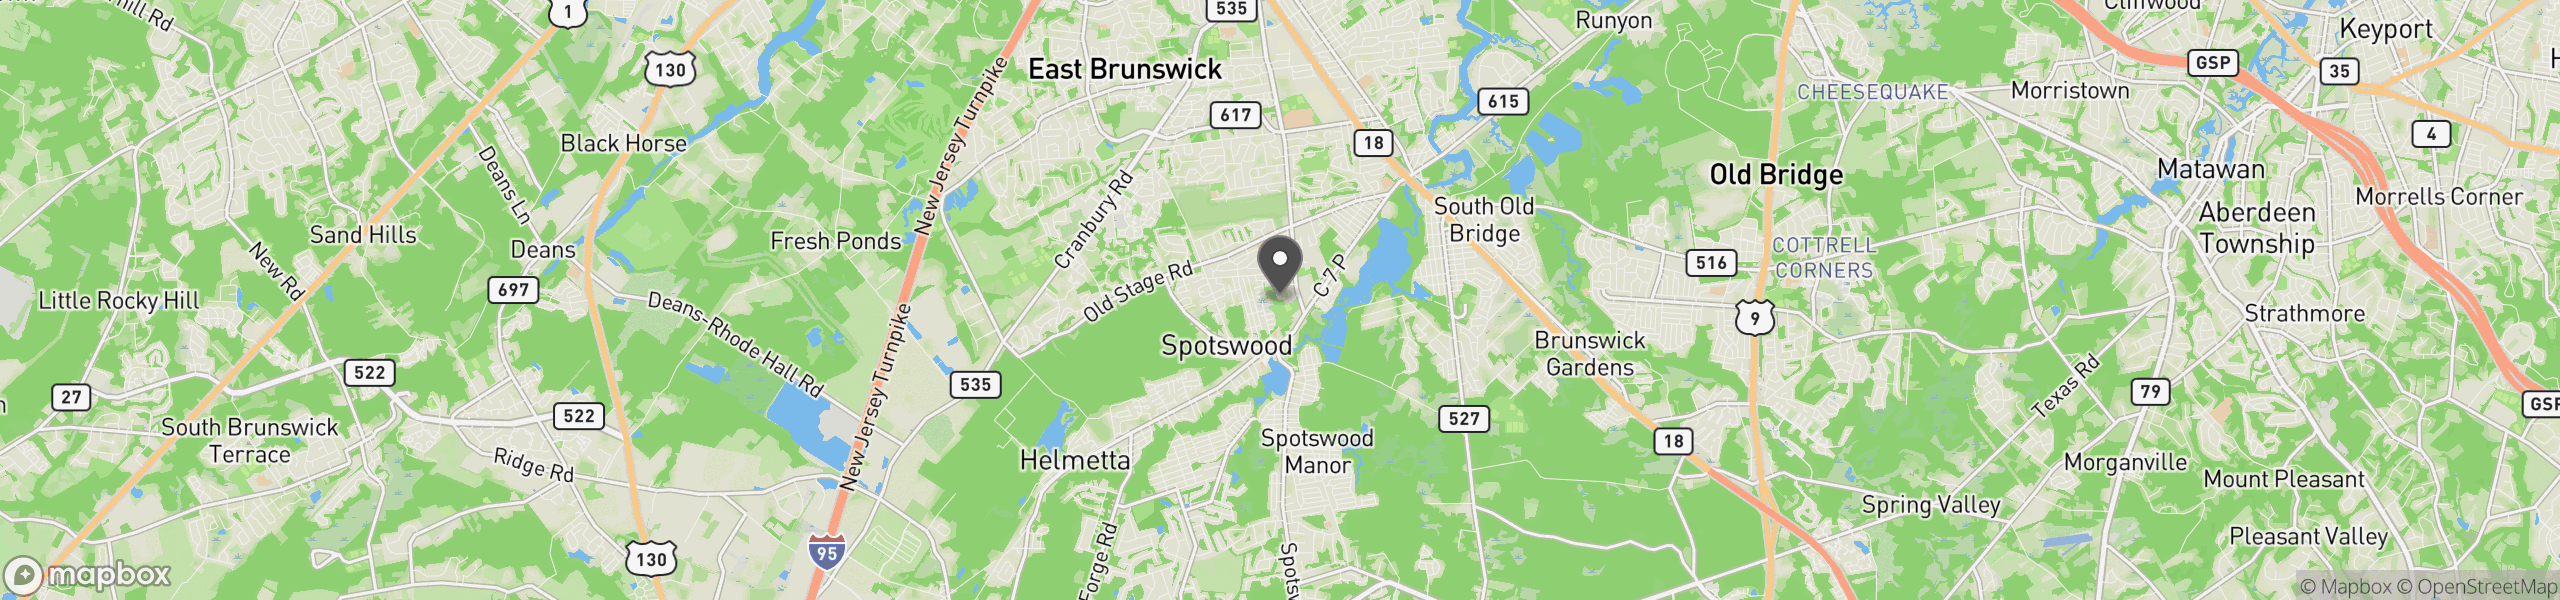 Spotswood, NJ 08884